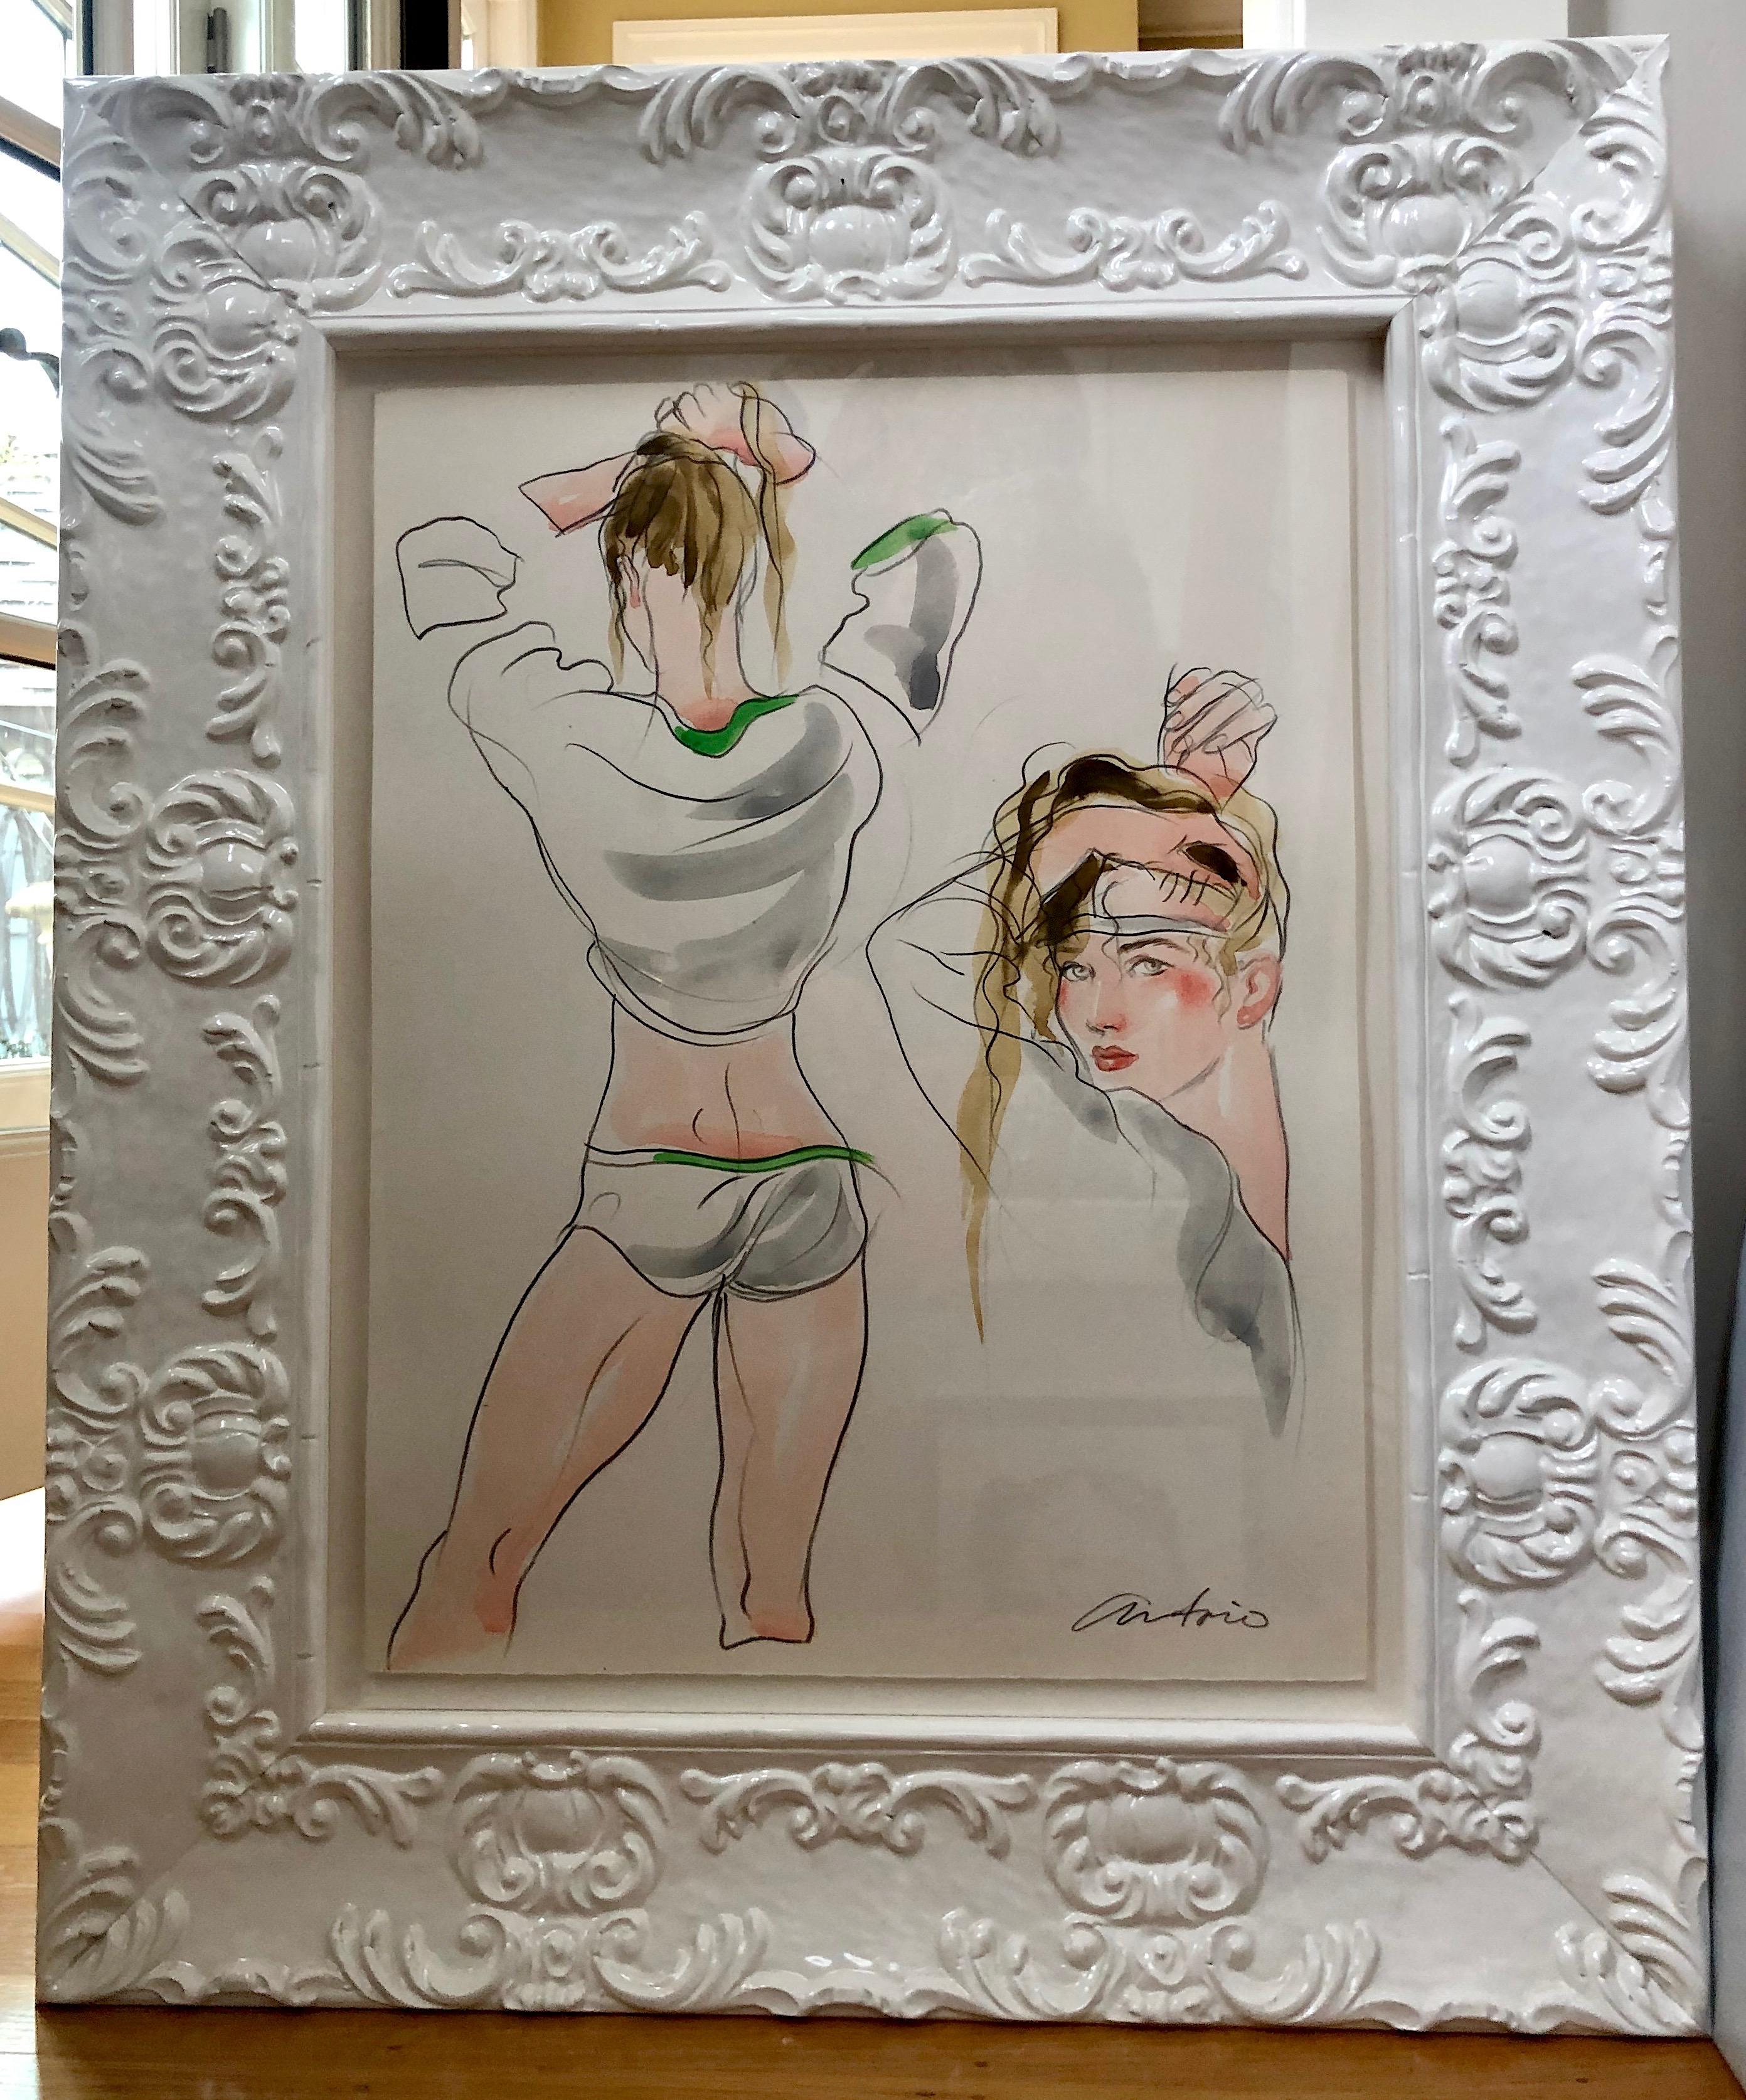 Antonio Lopez Original Framed Watercolor of an Underwear Fashion Illustration 2